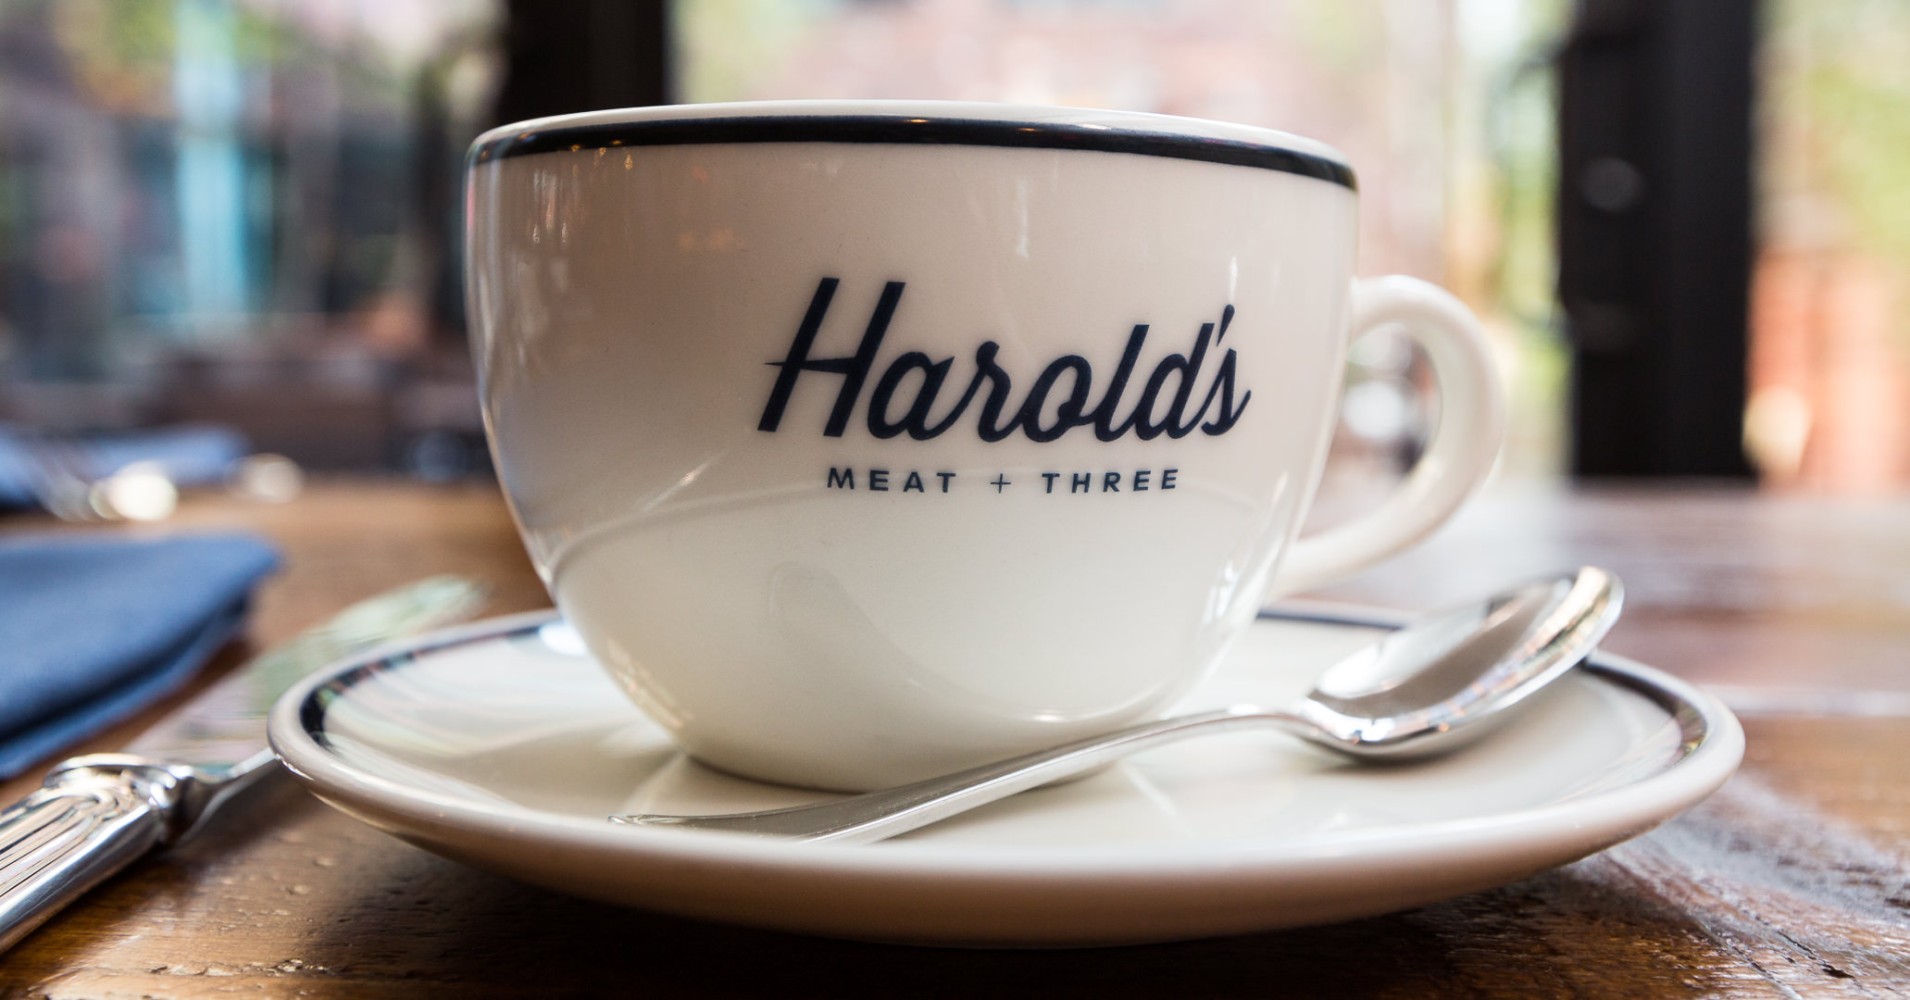 Harolds coffee cup-1